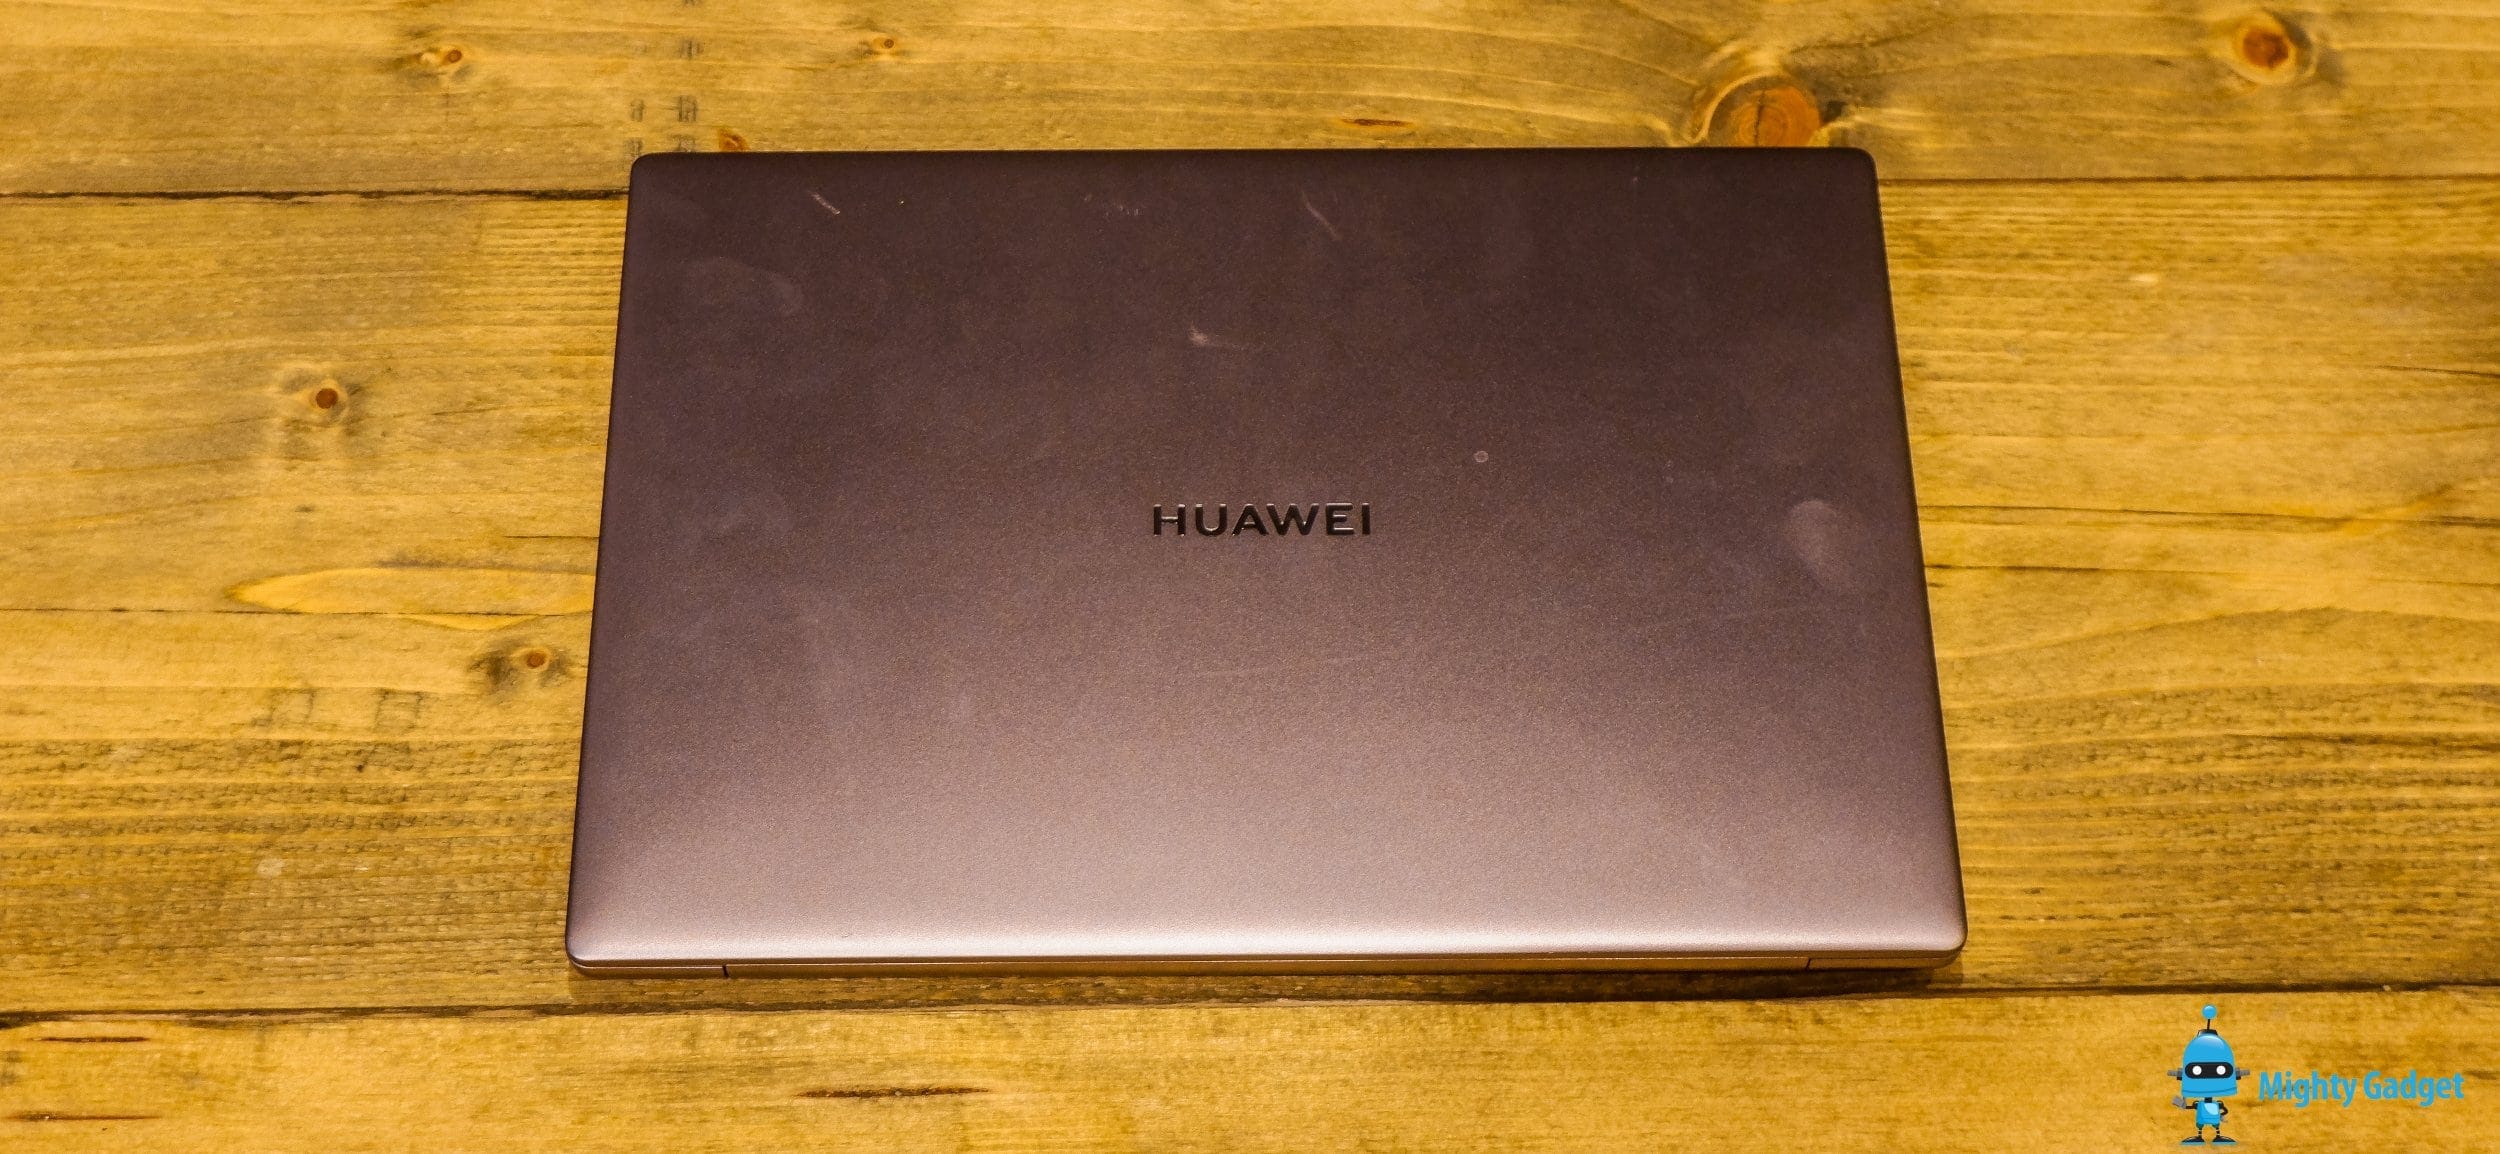 Huawei MateBook 14 2020 Review – An AMD Ryzen 5 4600H laptop offering superb all-round performance